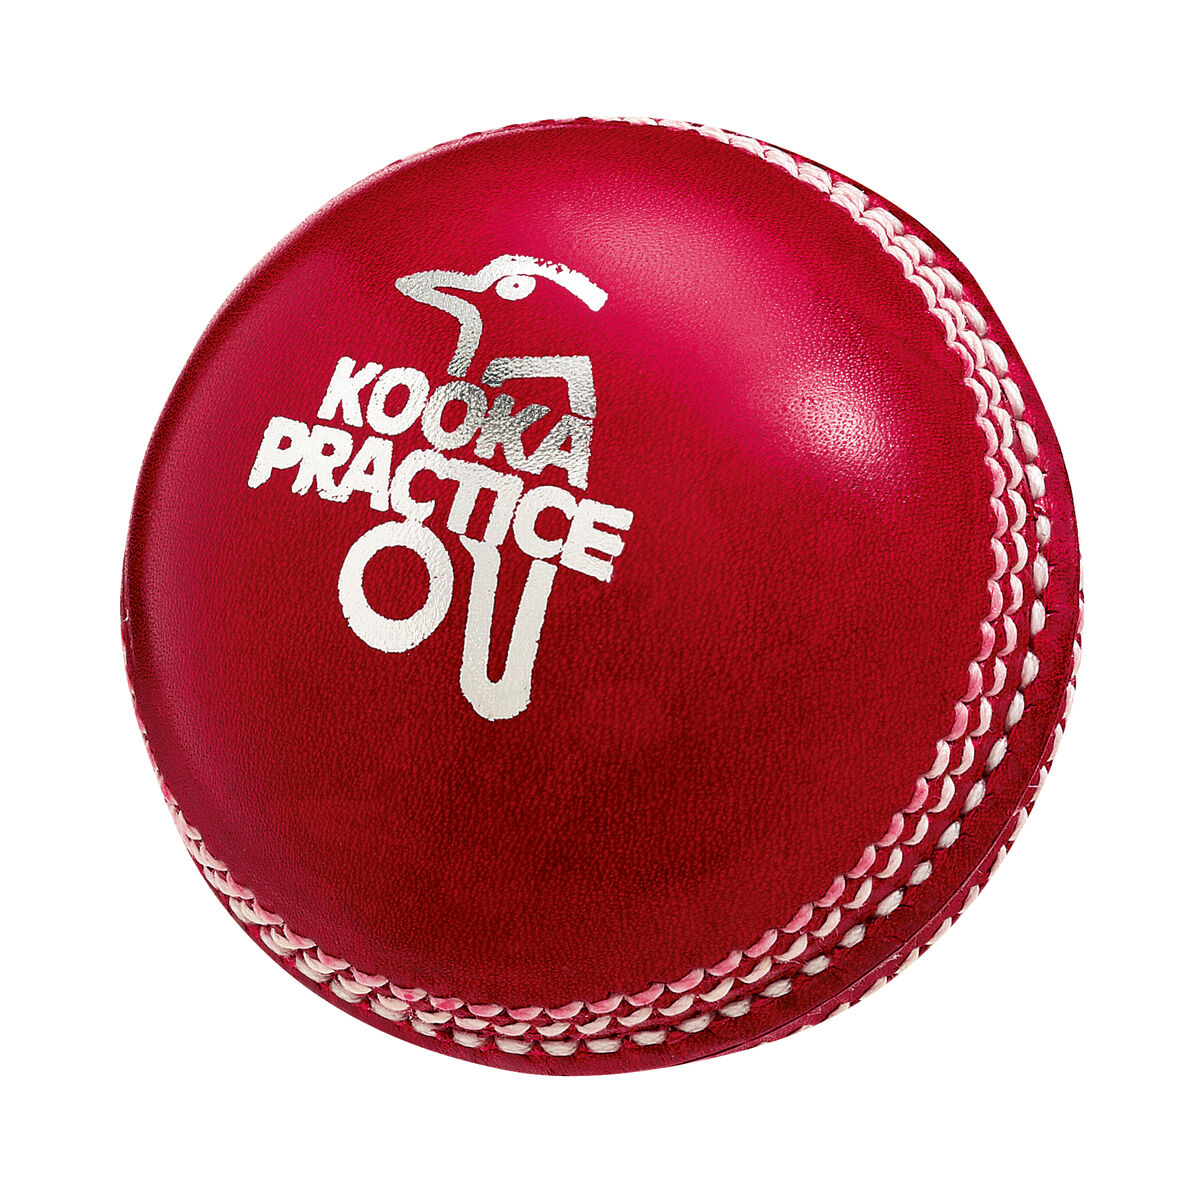 Kookaburra Practice Cricket Ball | Gov 